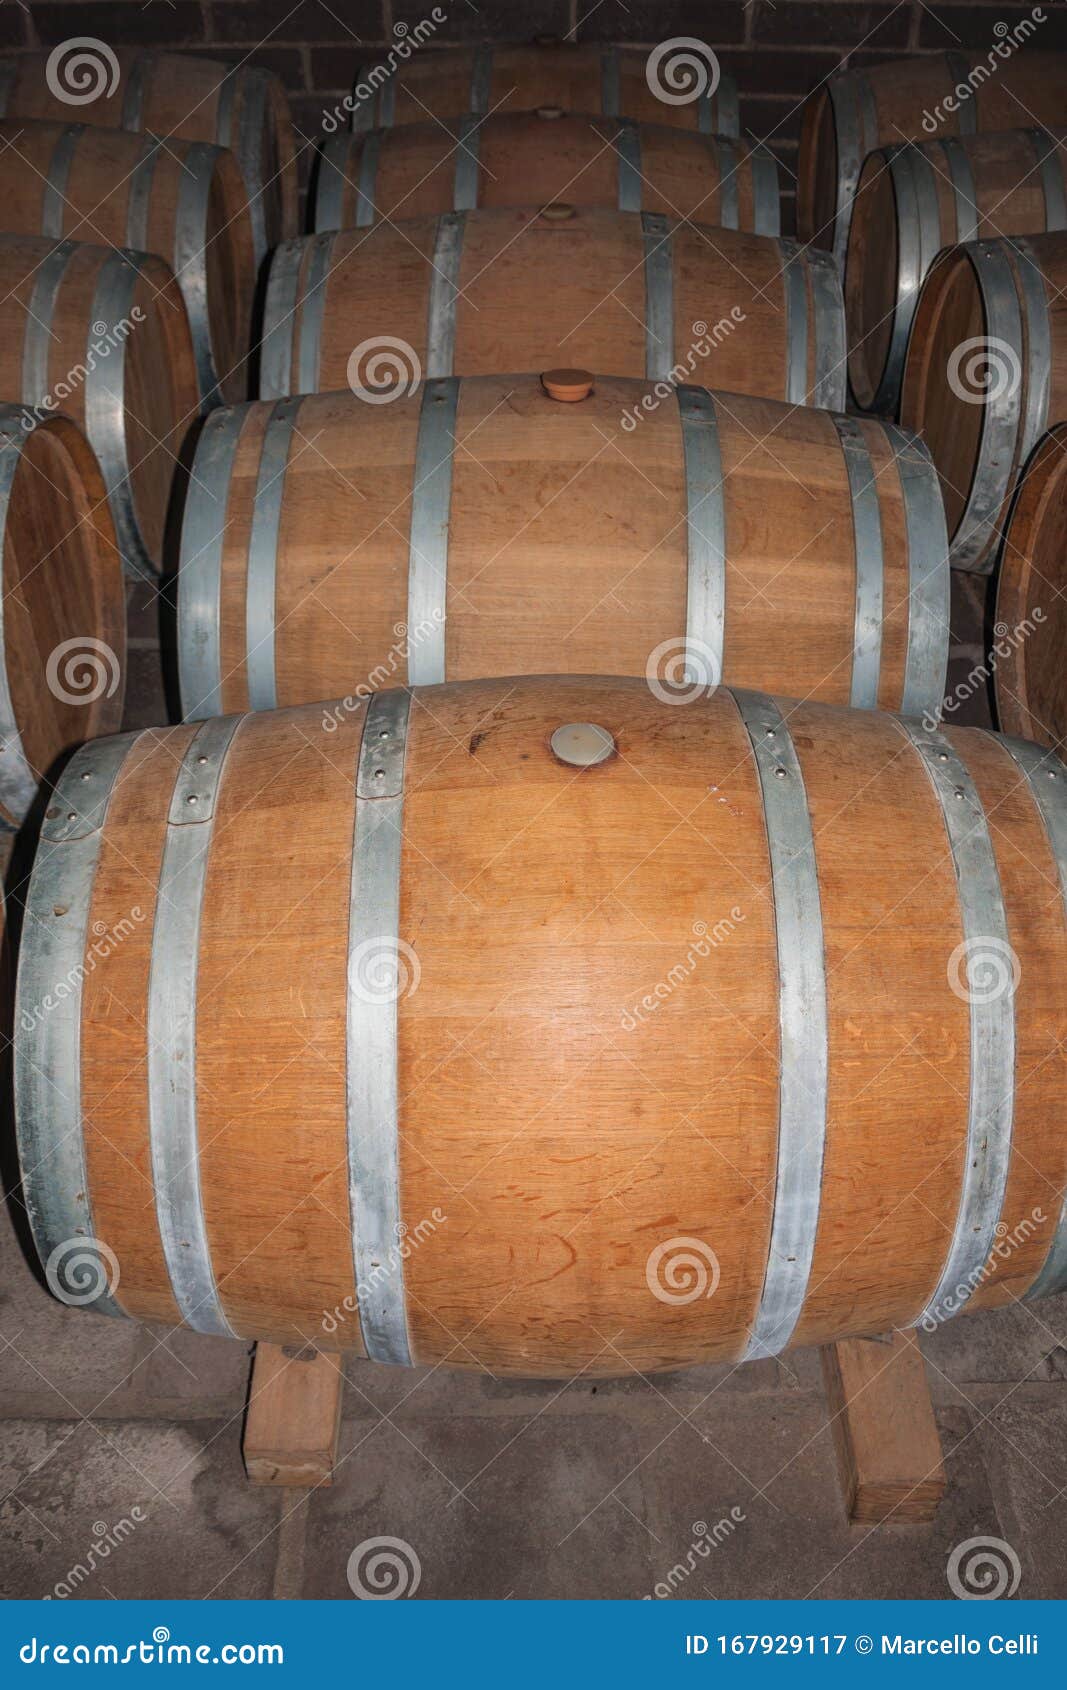 wooden barrels for wine storage in a cellar